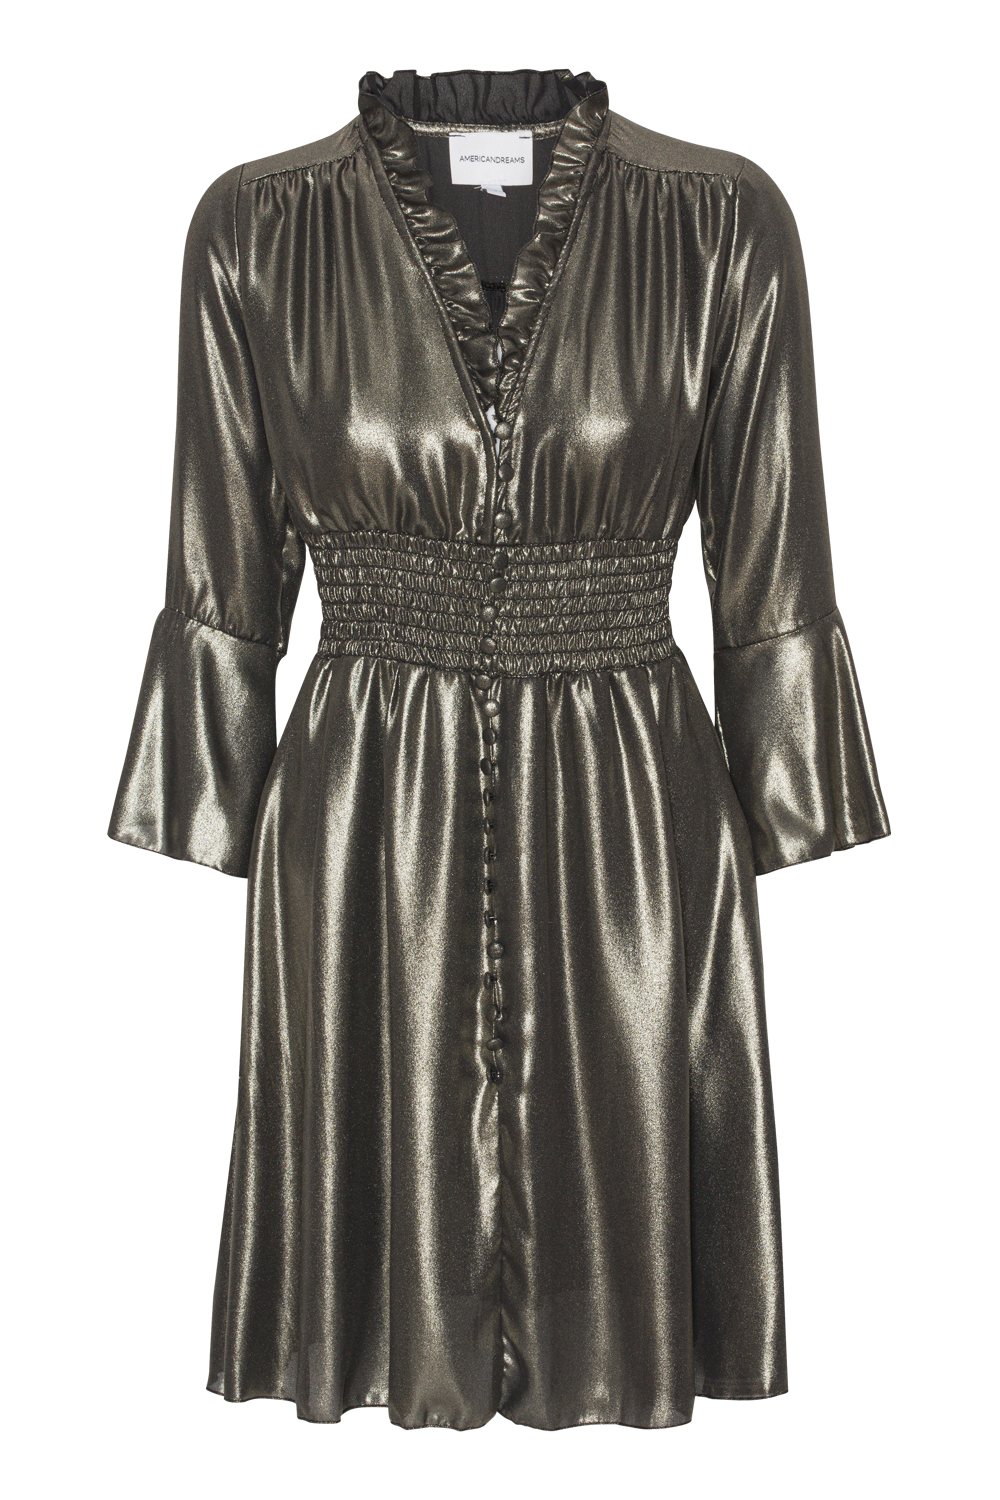 Sally Short Shimmer Dress Black